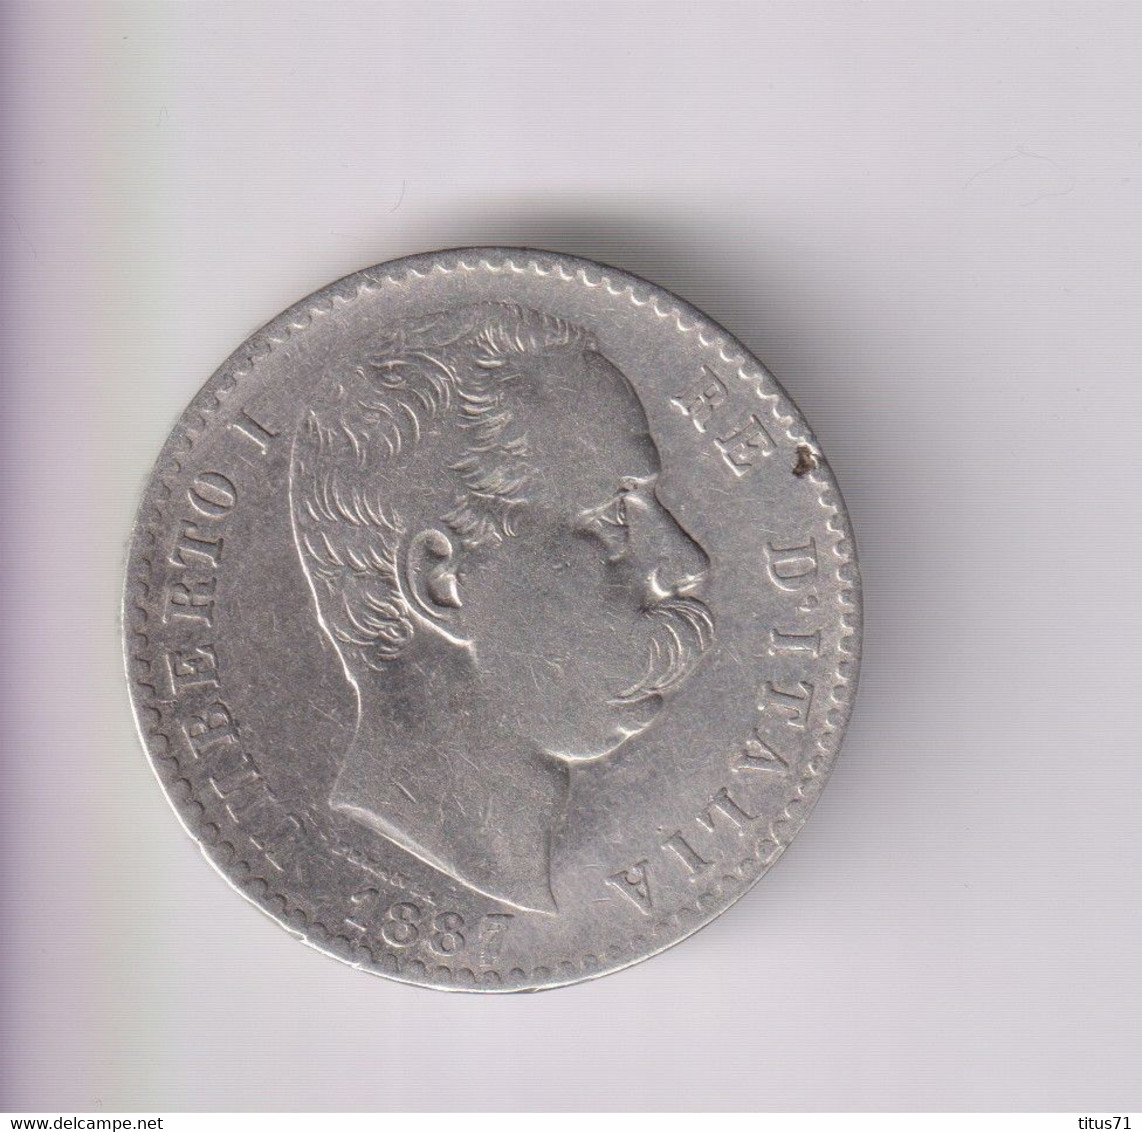 2 Lire Italie / Italy 1887 TTB+ - 1878-1900 : Umberto I